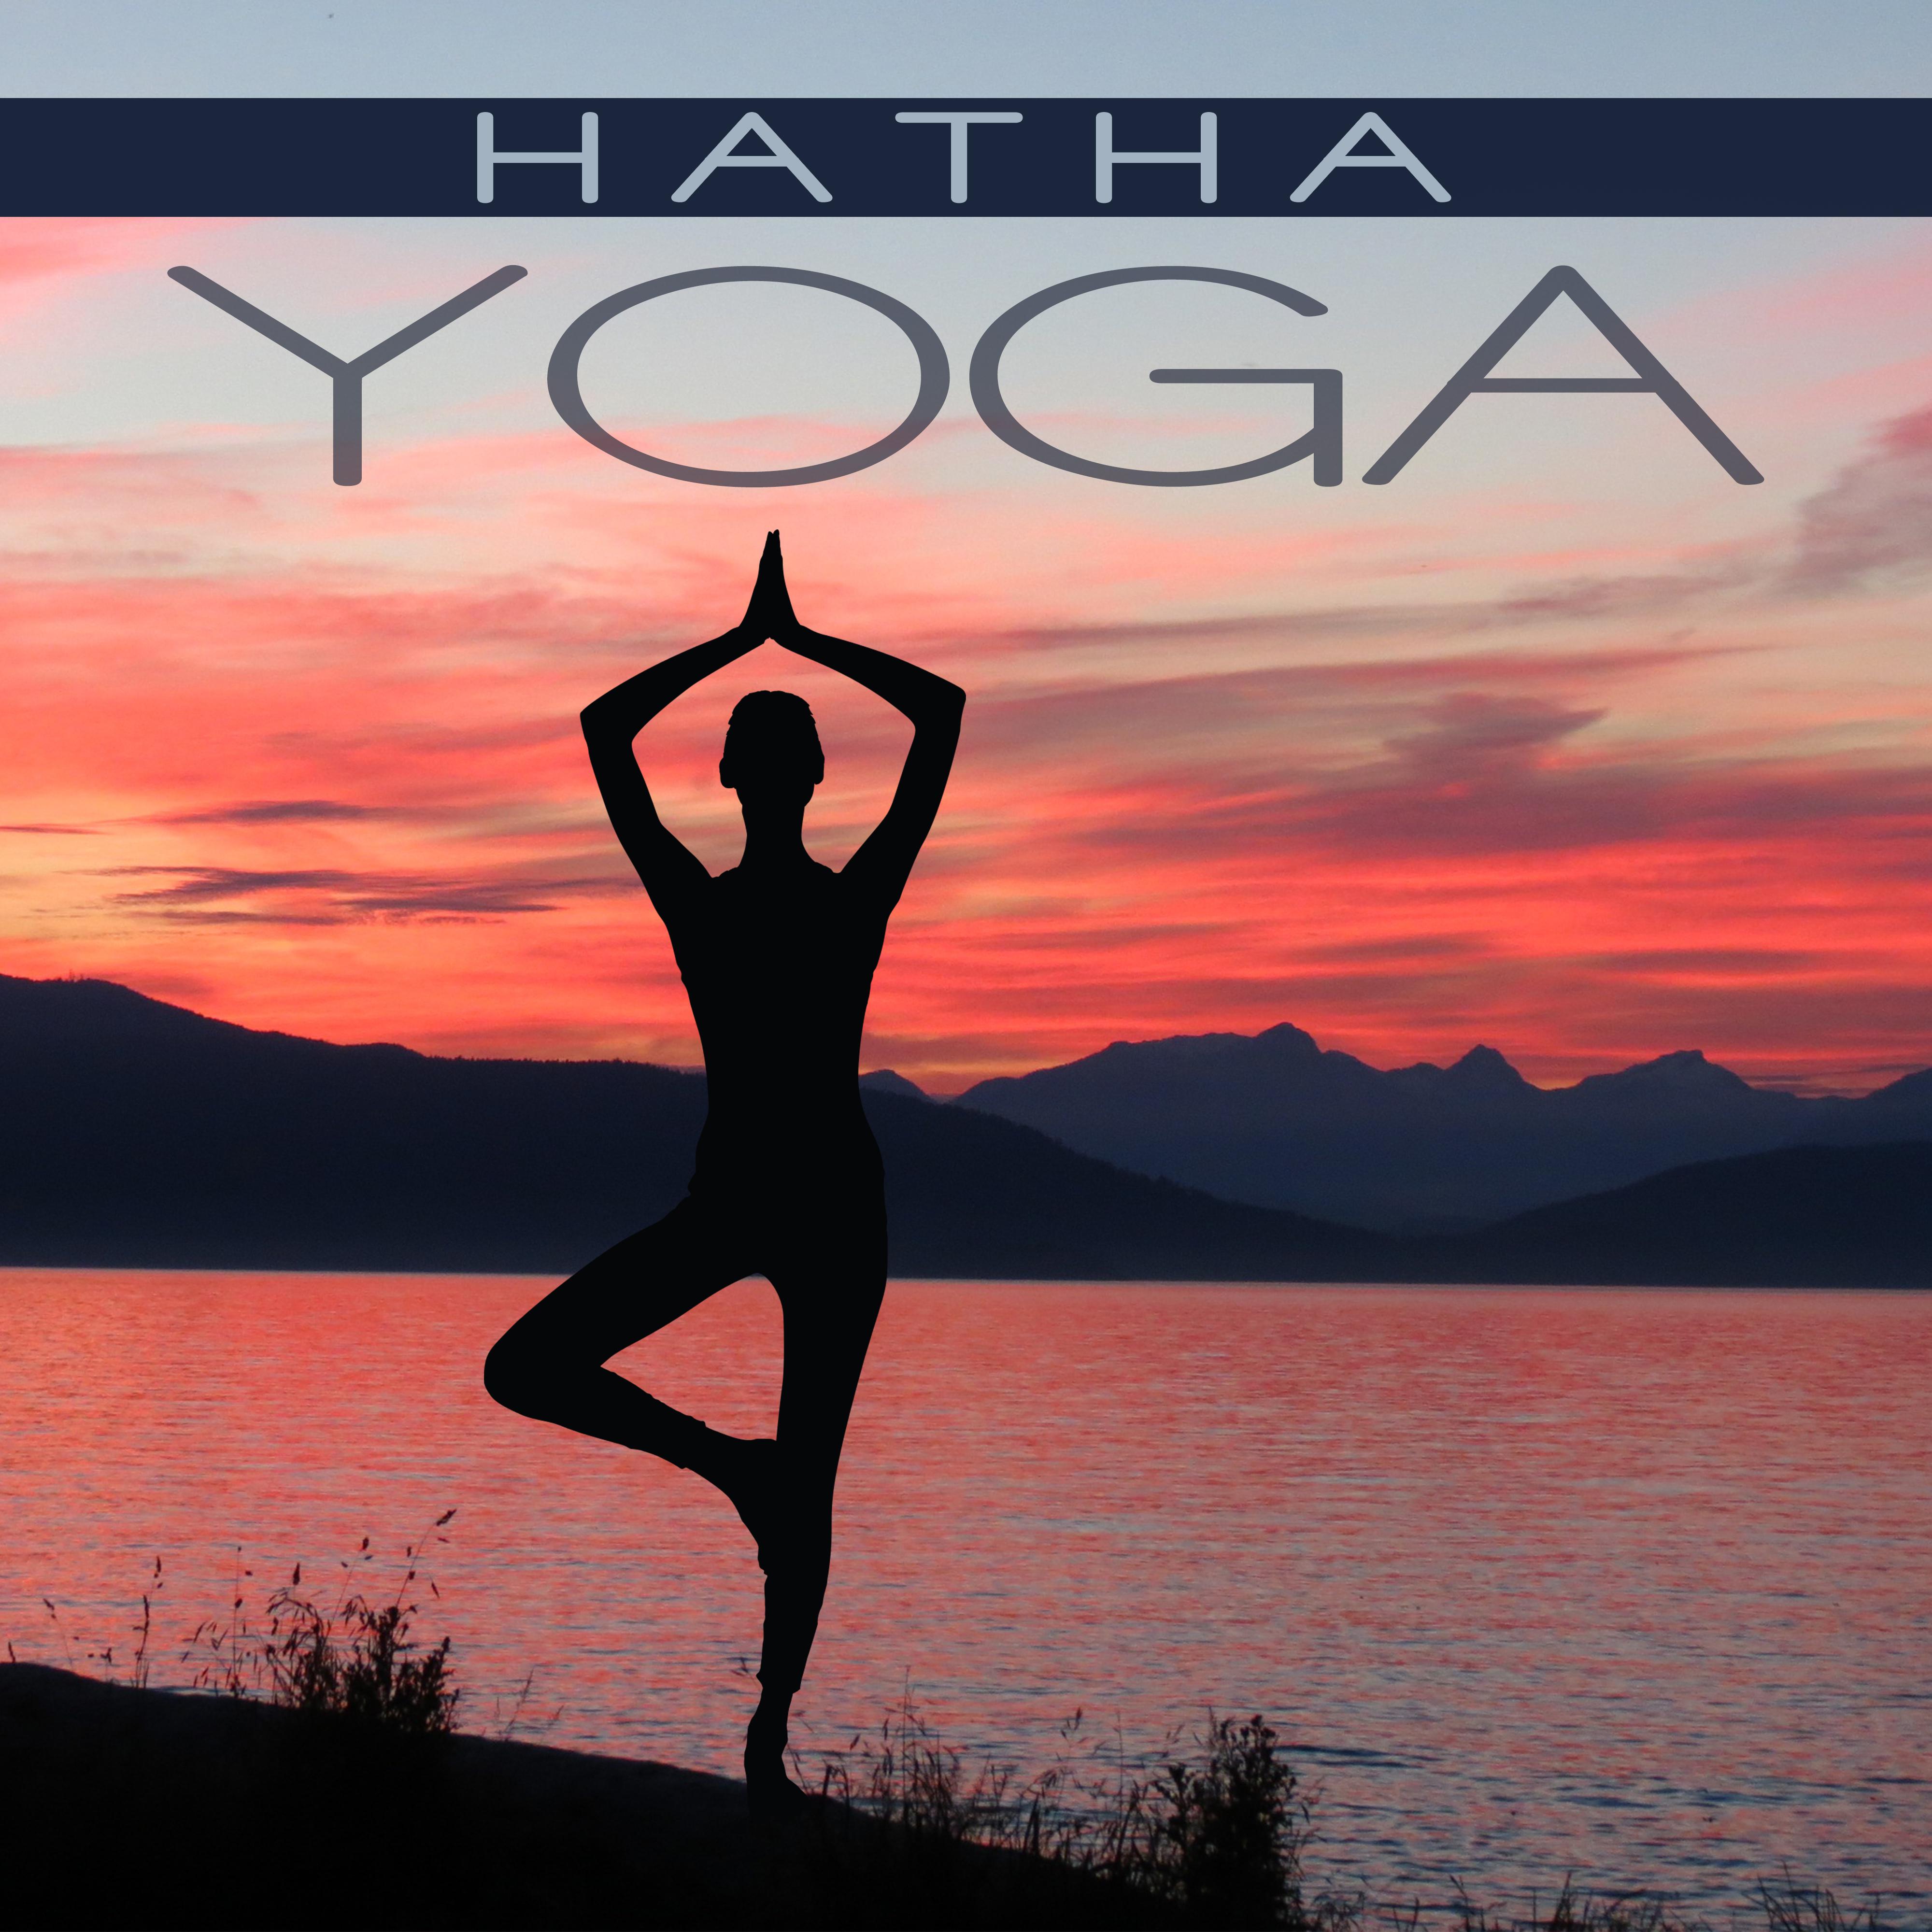 Hatha Yoga – Tibetan Music for Meditation, Healing, Asian Zen, Relax, Chakra Balancing, Spiritual Journey, Stress Relief